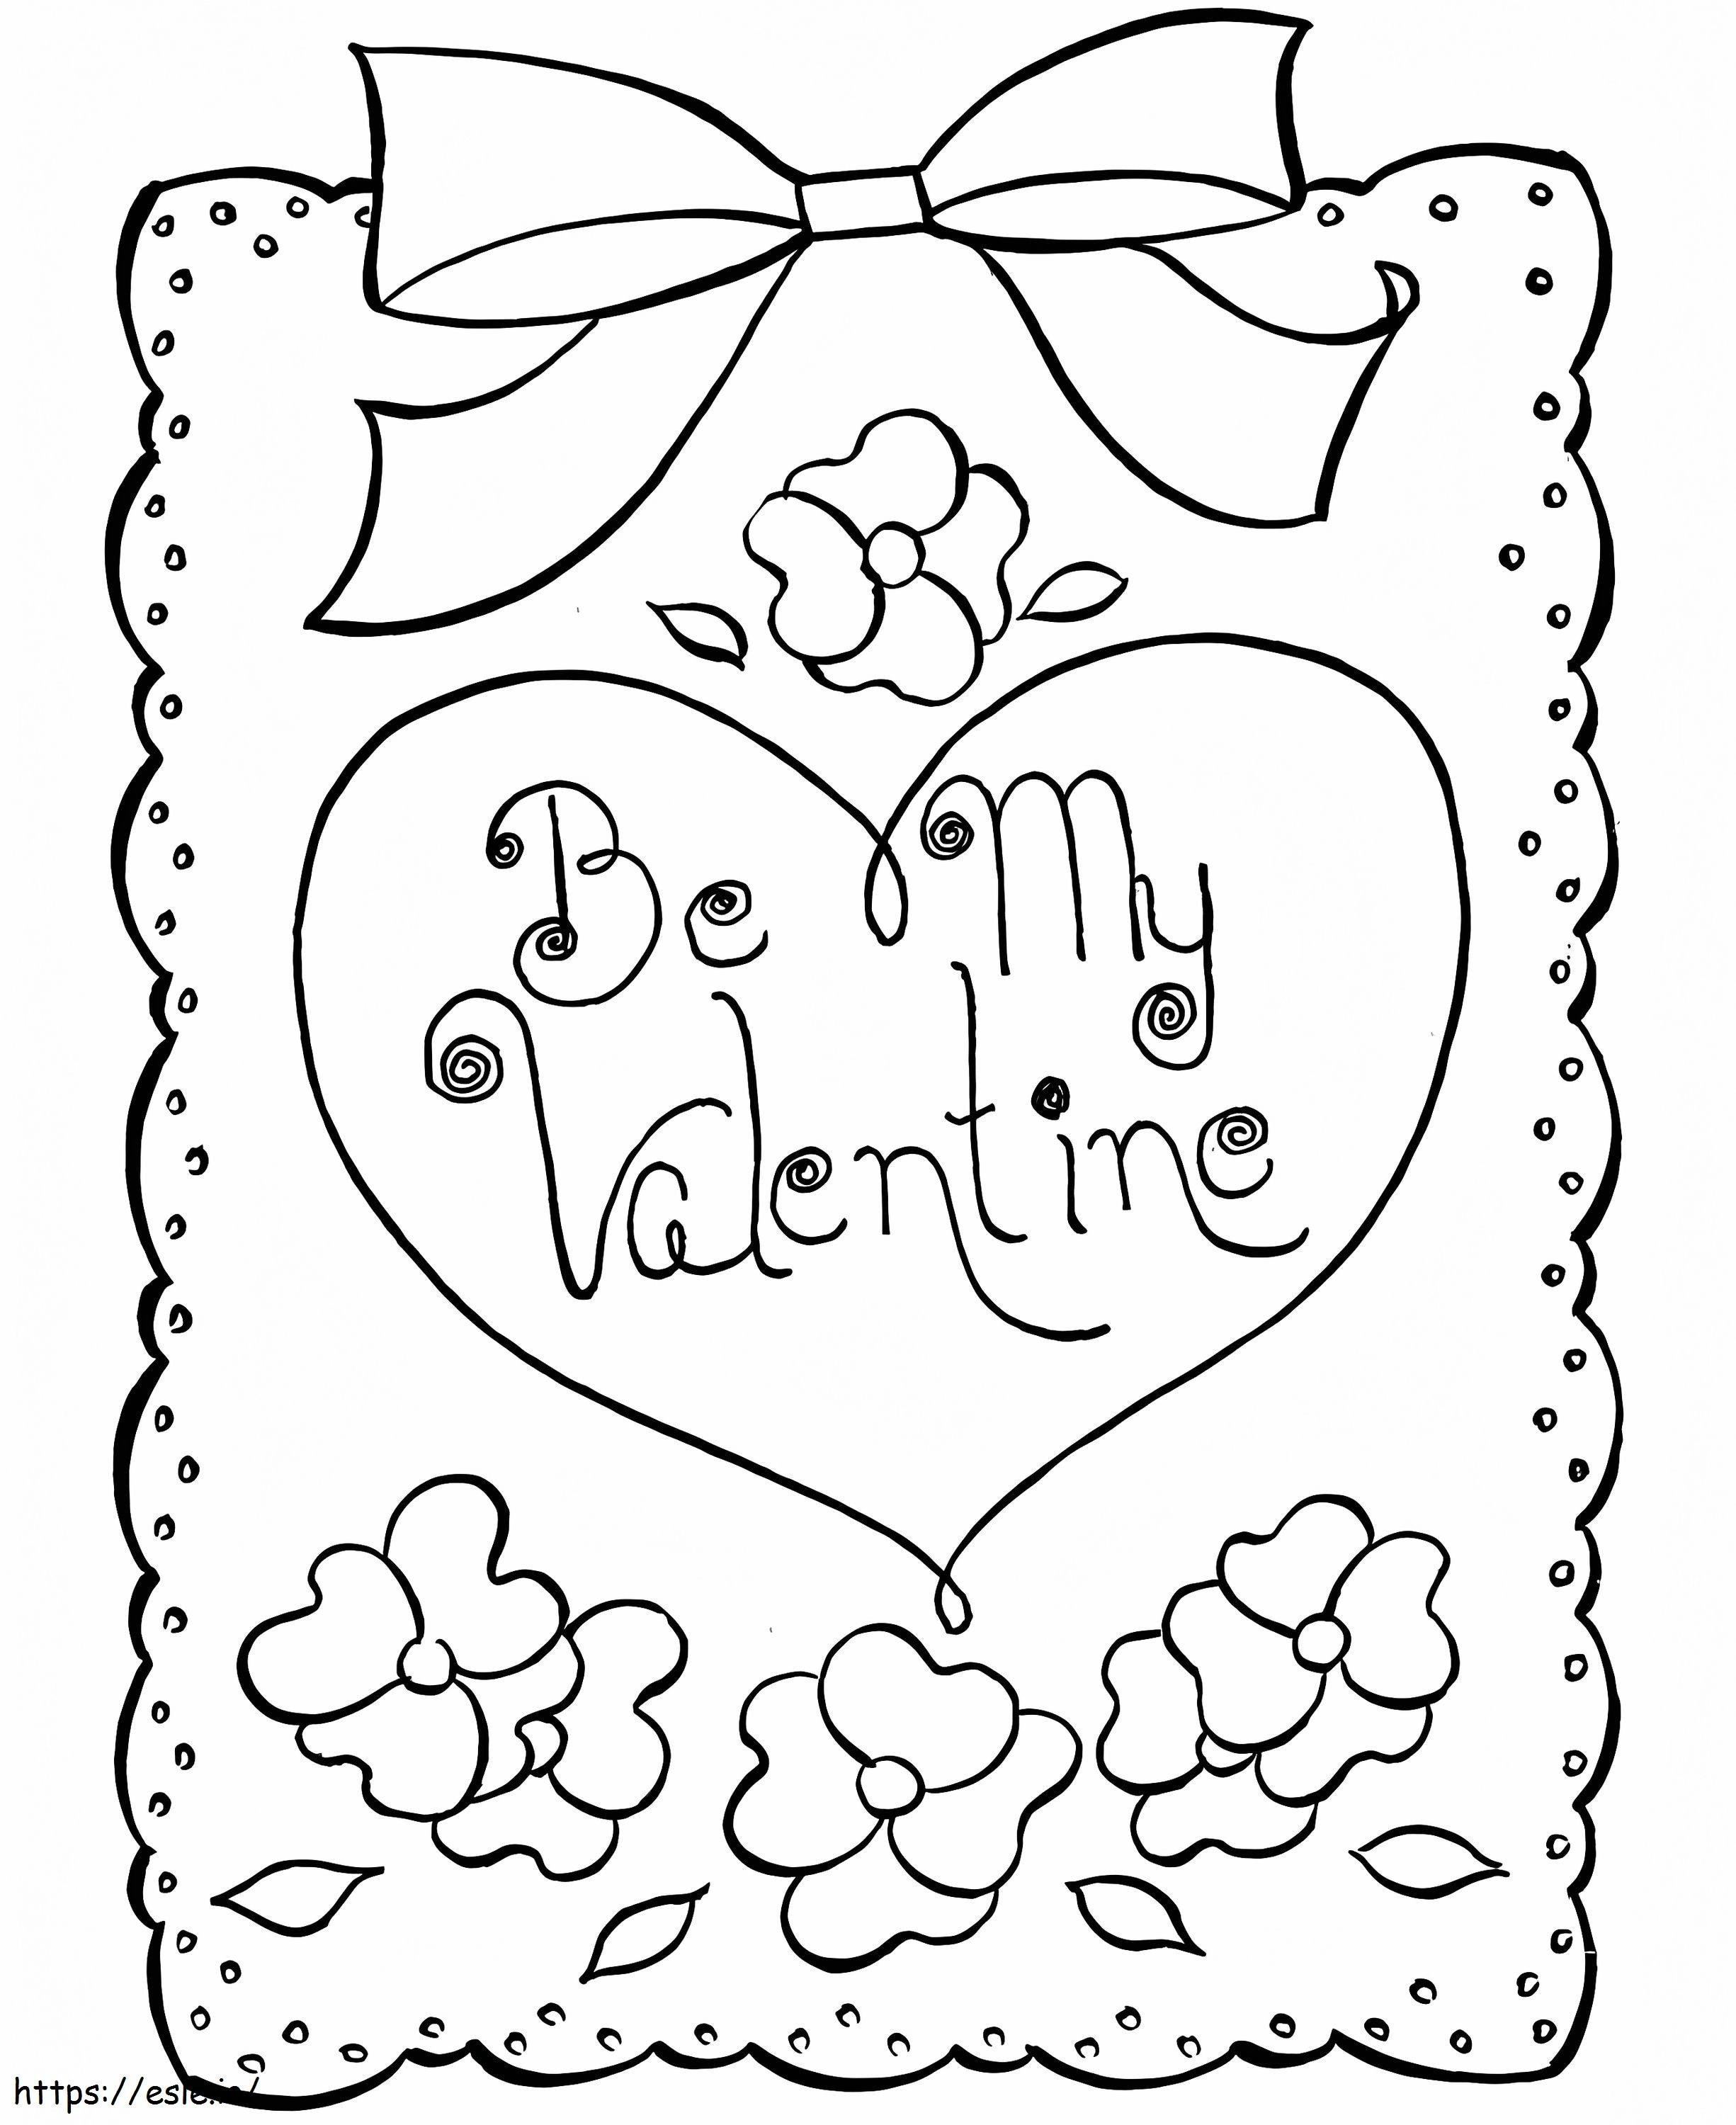 Tarjeta de San Valentín para imprimir gratis para colorear